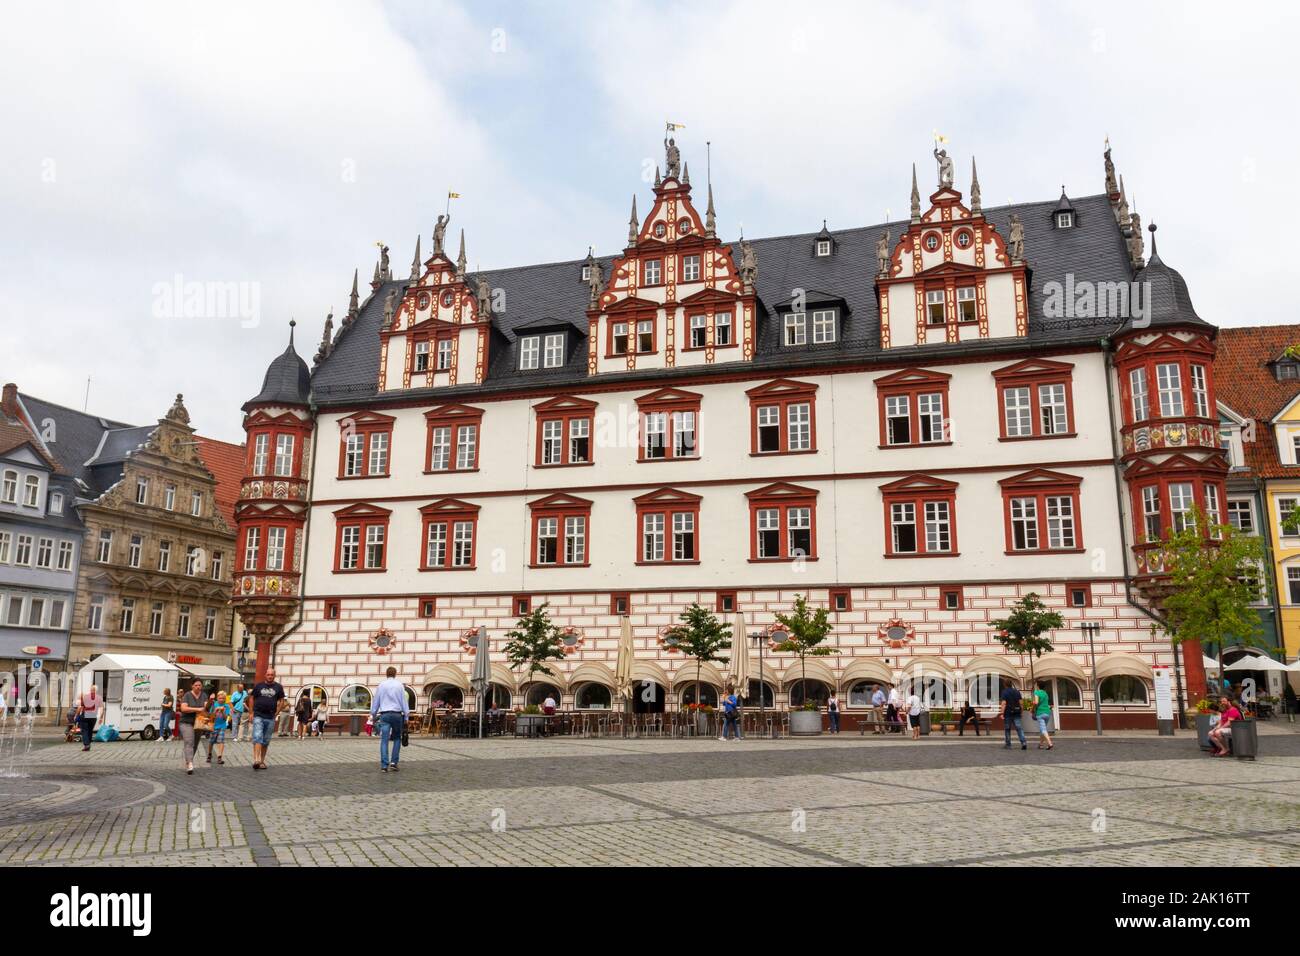 The Stadthaus in Marktplatz, (Market Place), Coburg, Bavaria, Germany. Stock Photo